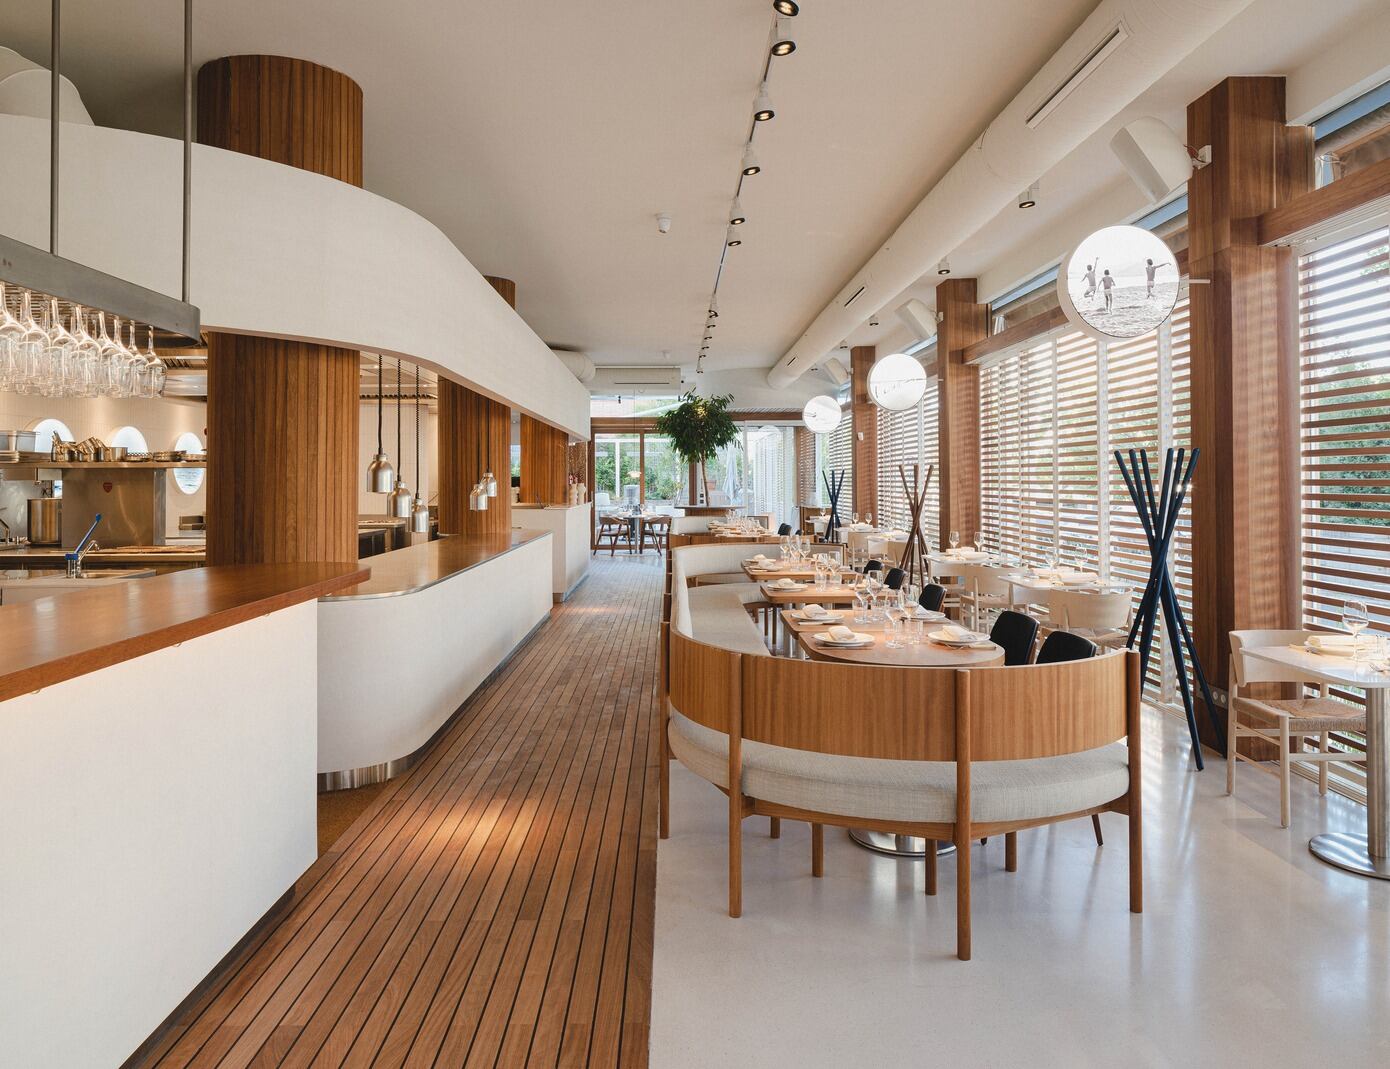 La Maruca de López de Hoyos: Madrid’s New Restaurant with Maritime Charm